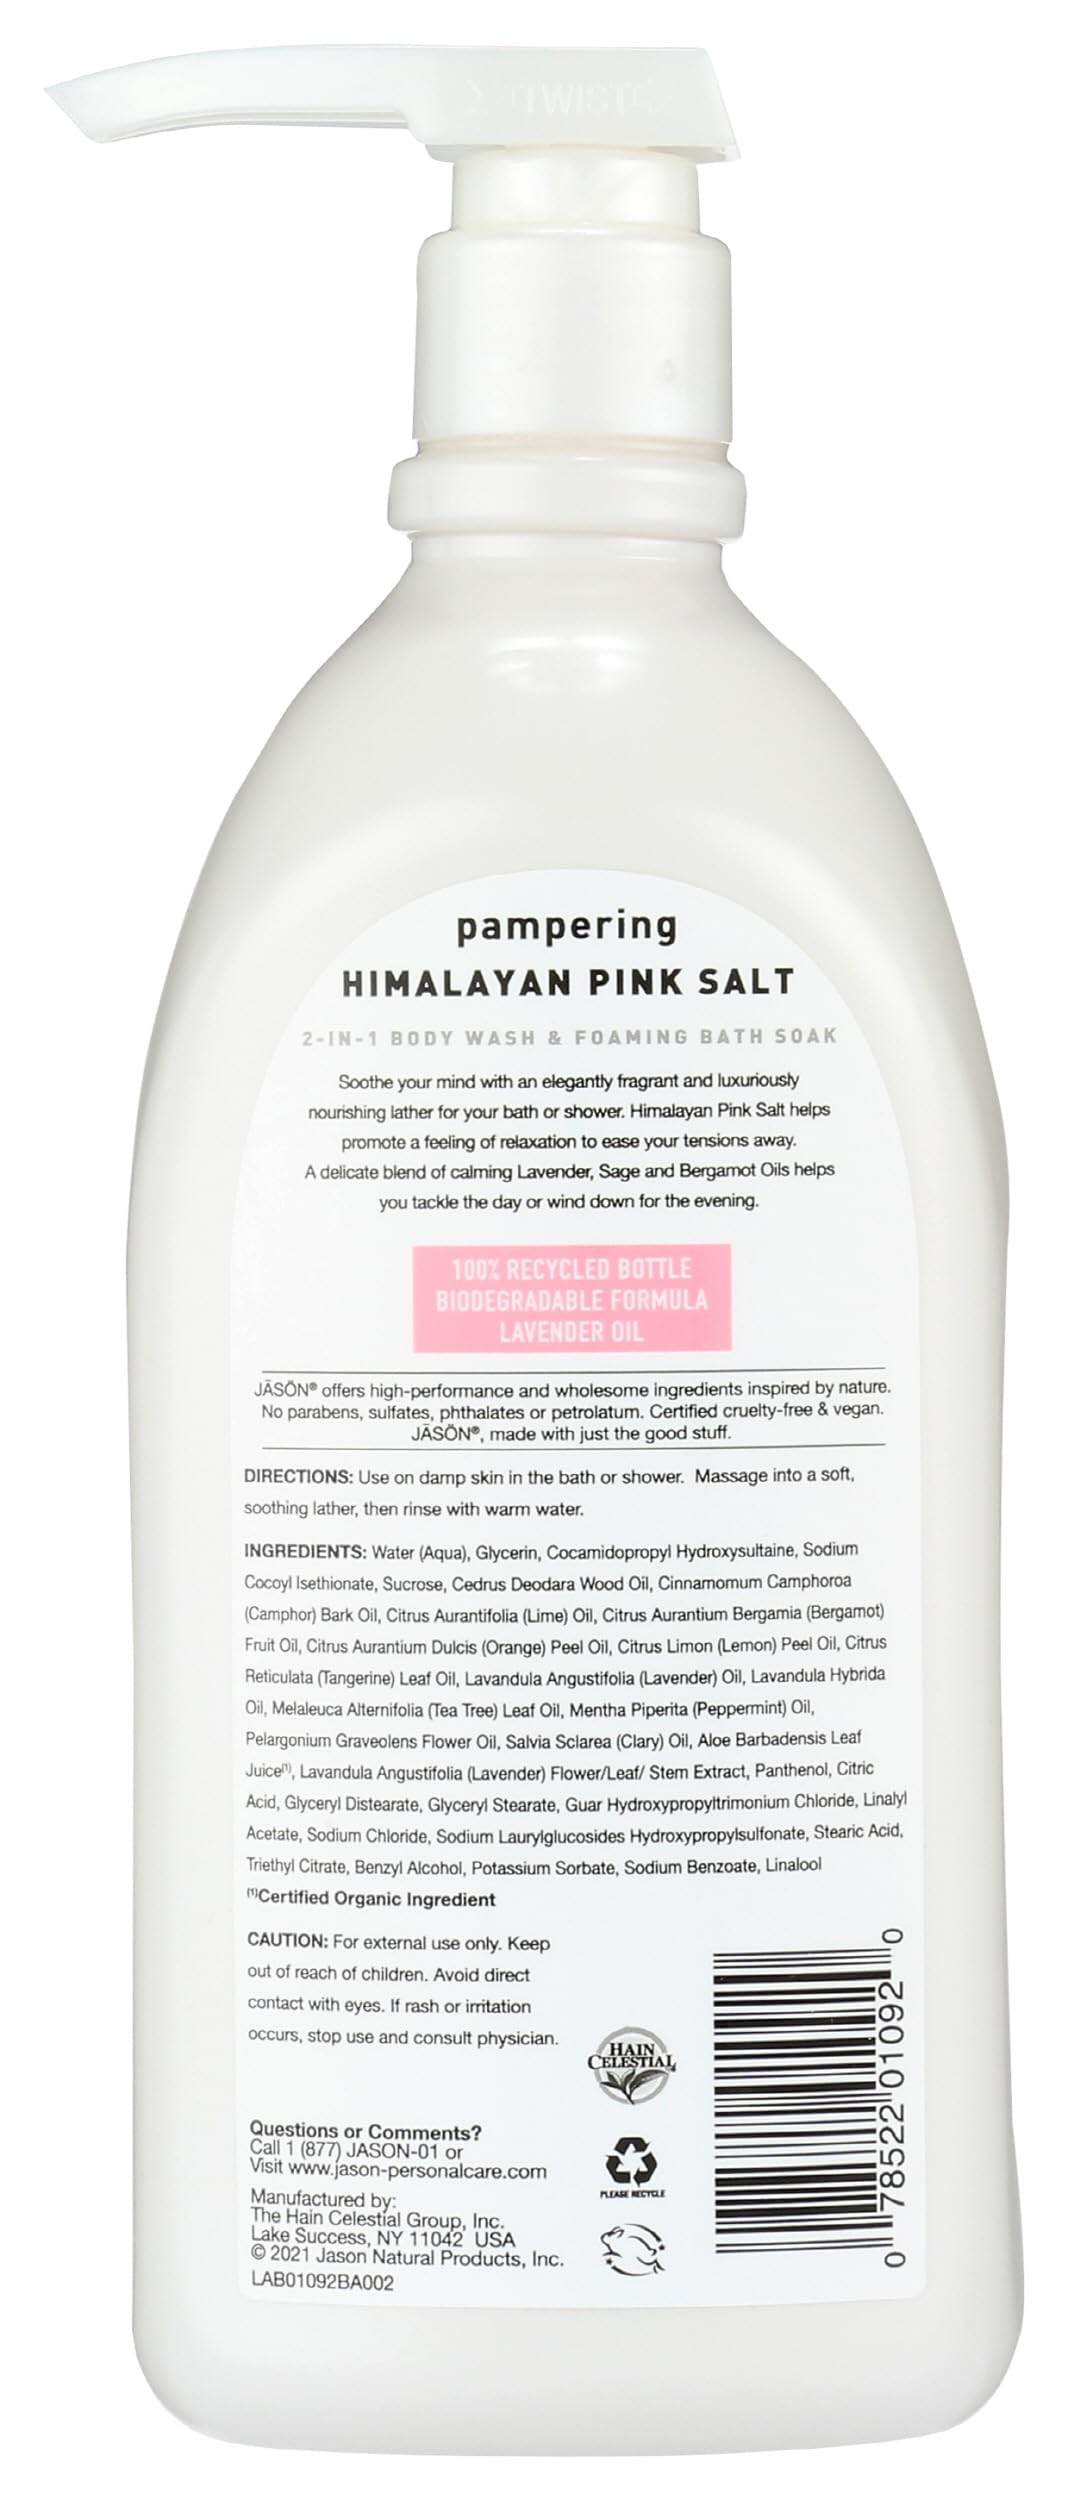 Jason Pampering Himalayan Pink Salt 2 in 1 Foaming Bath Soak & Body Wash 30 fl oz